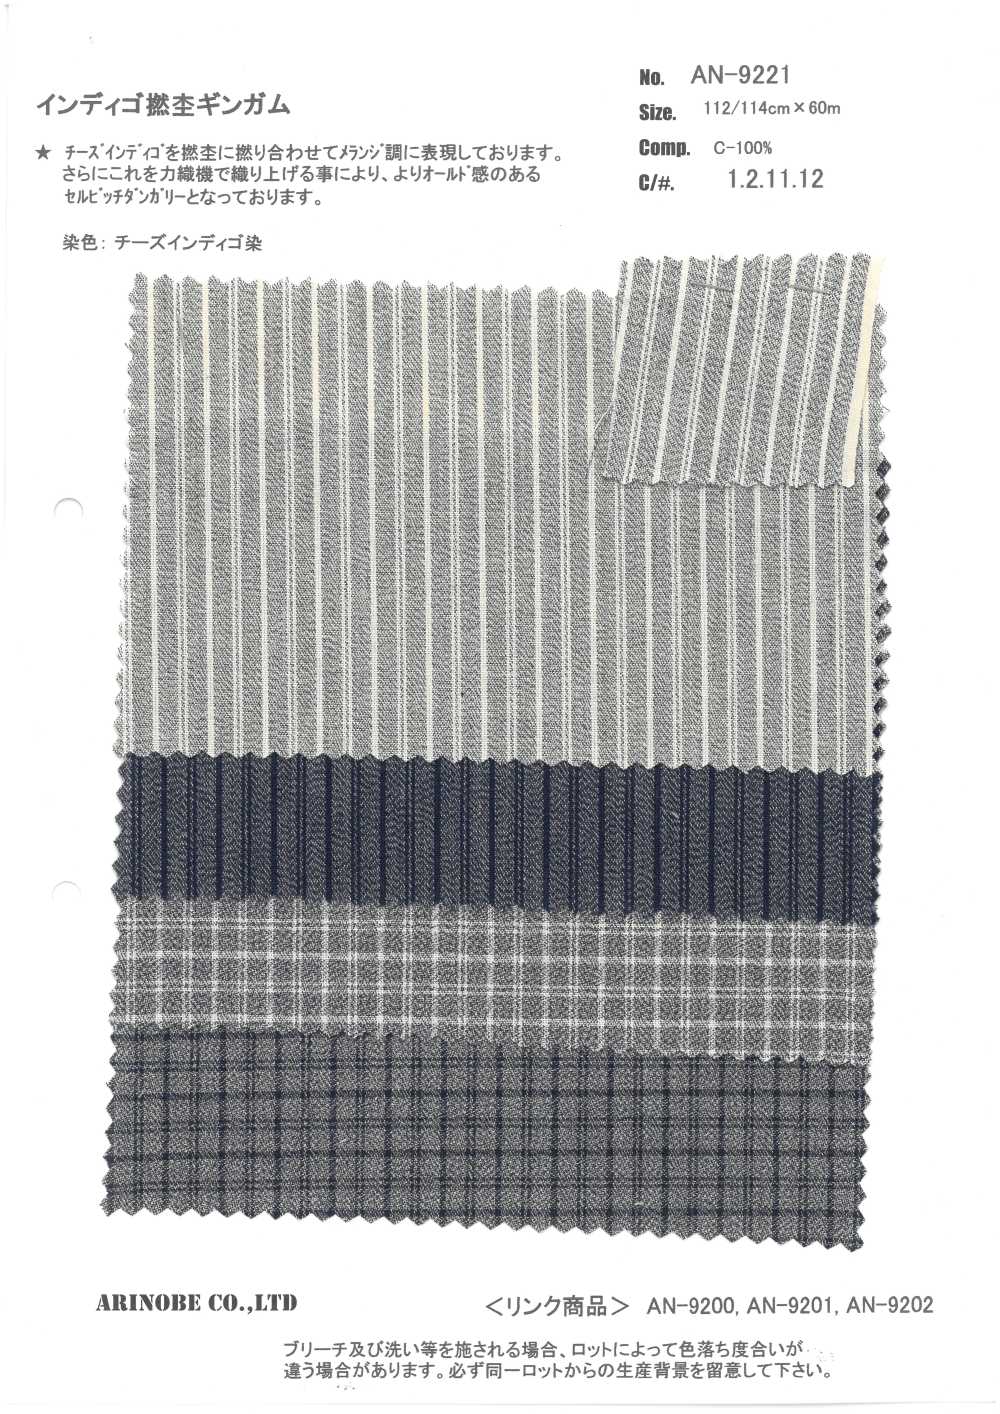 AN-9221 Indigo Twisted Heather Gingham[Textile / Fabric] ARINOBE CO., LTD.